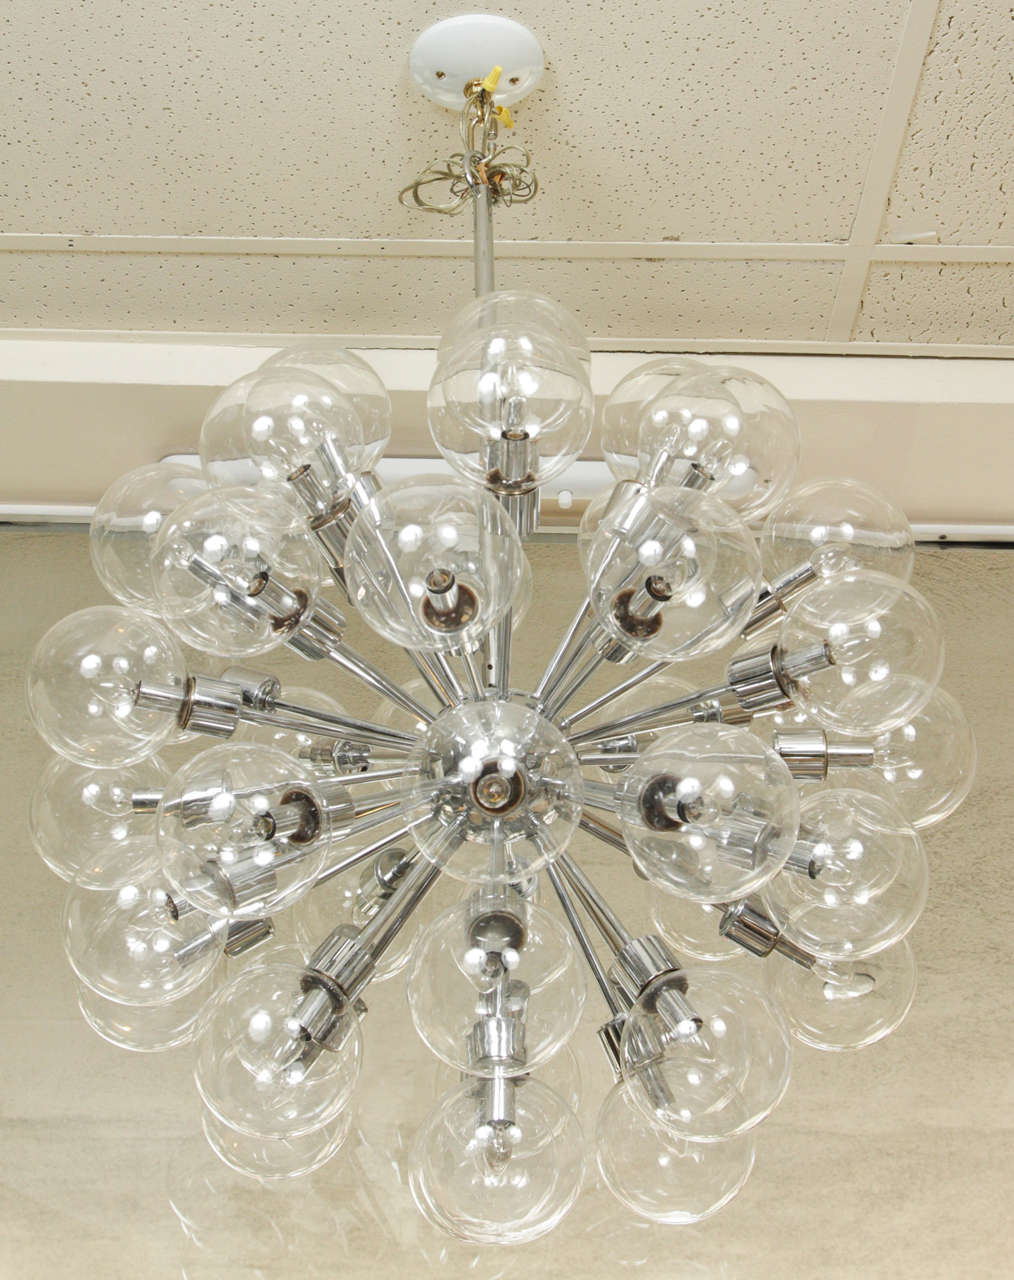 Large vintage 43 globe Sputnik chandelier by Lightolier.
This polished chrome fixture supports 43 6